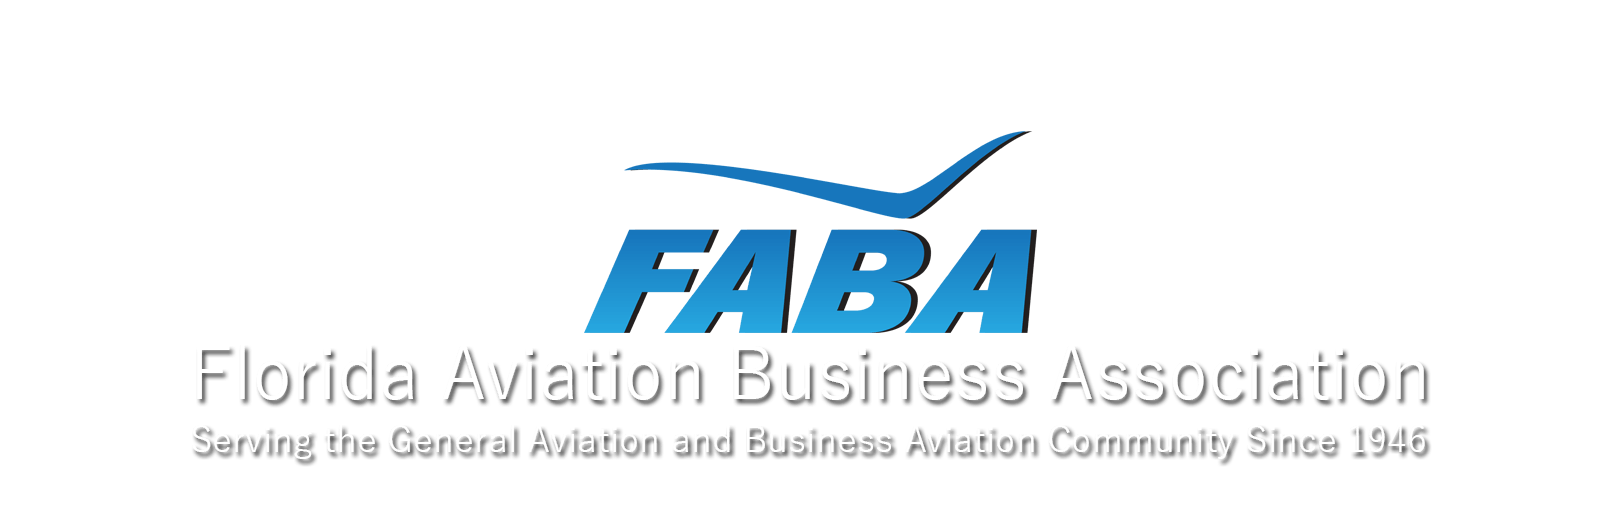 General Aviation Logo - Florida Aviation Business Association. FABA Aviation